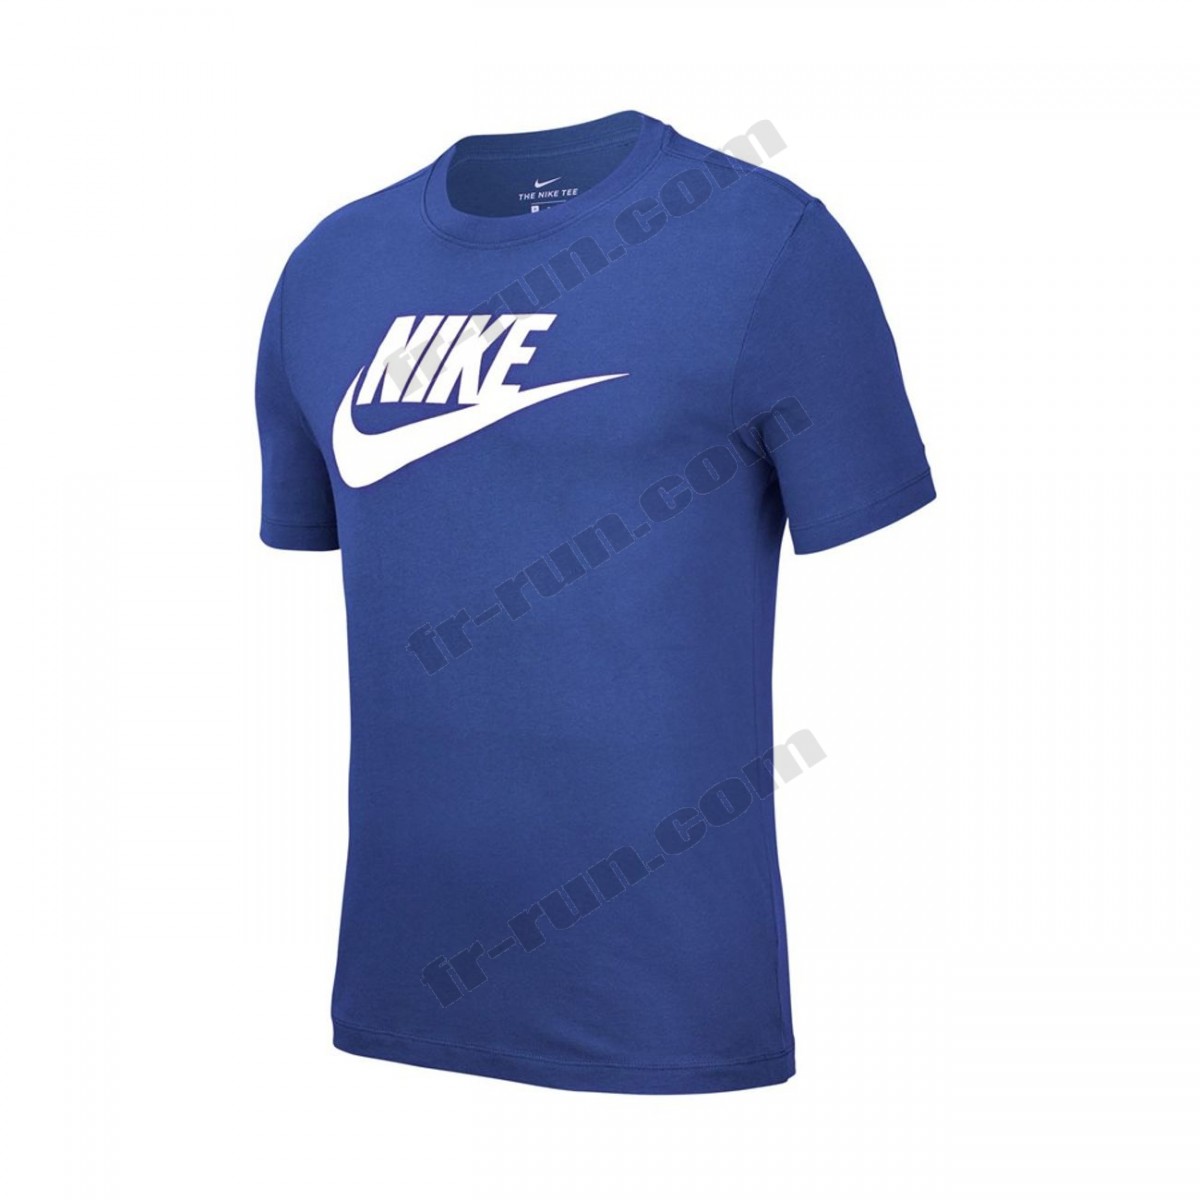 Nike/running homme NIKE Nike Icon Futura ◇◇◇ Pas Cher Du Tout - Nike/running homme NIKE Nike Icon Futura ◇◇◇ Pas Cher Du Tout